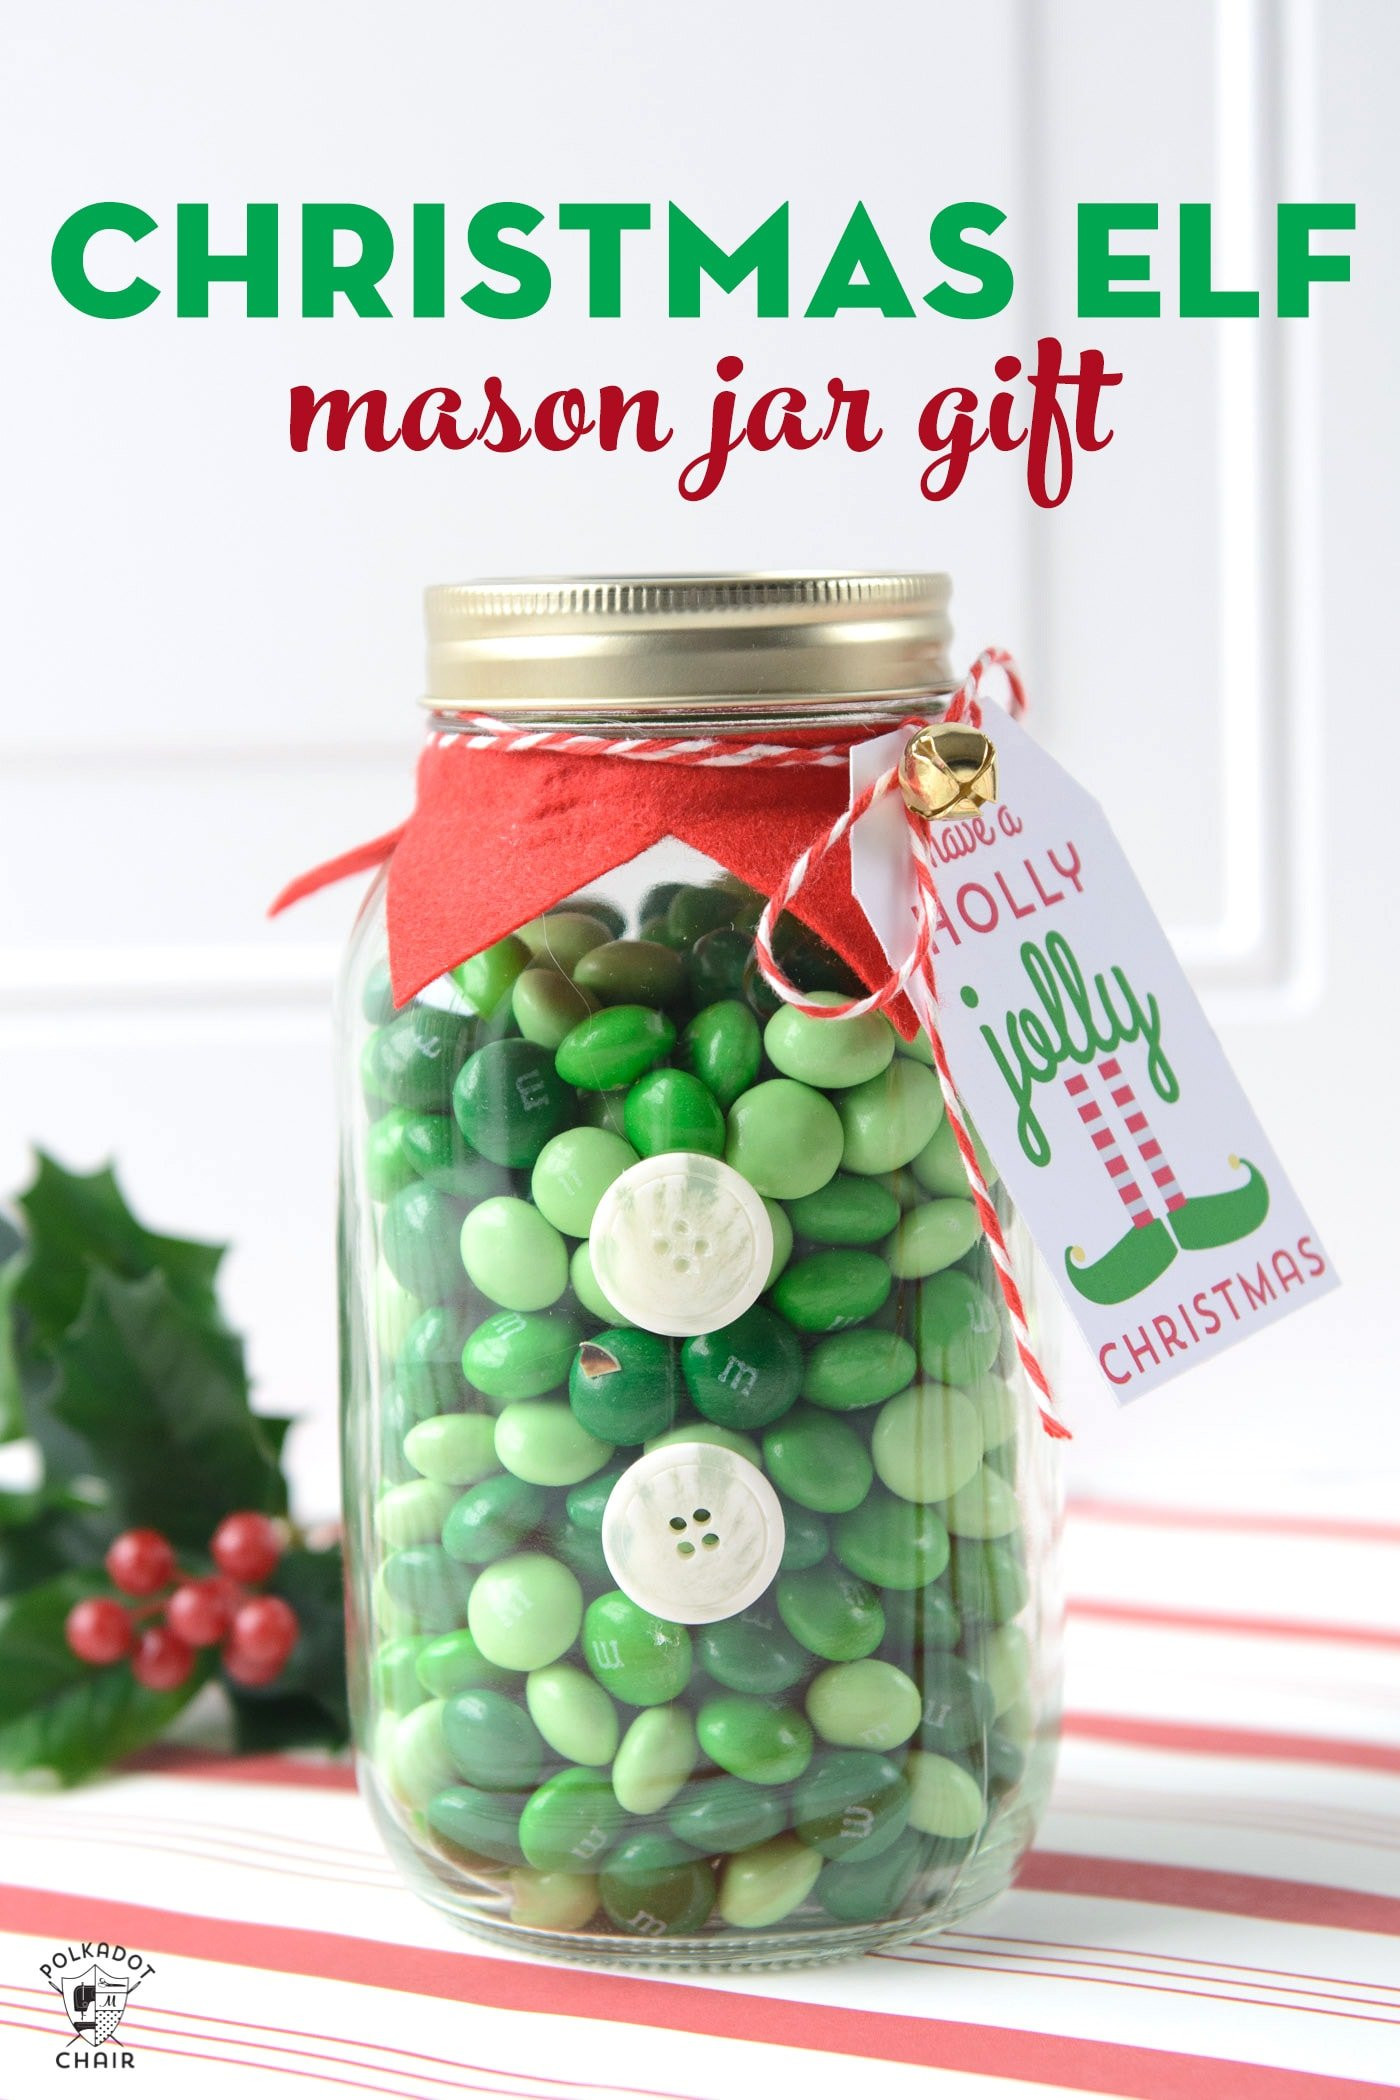 DIY Mason Jar Christmas Gifts
 DIY Elf Mason Jars & Cute Christmas Gifts